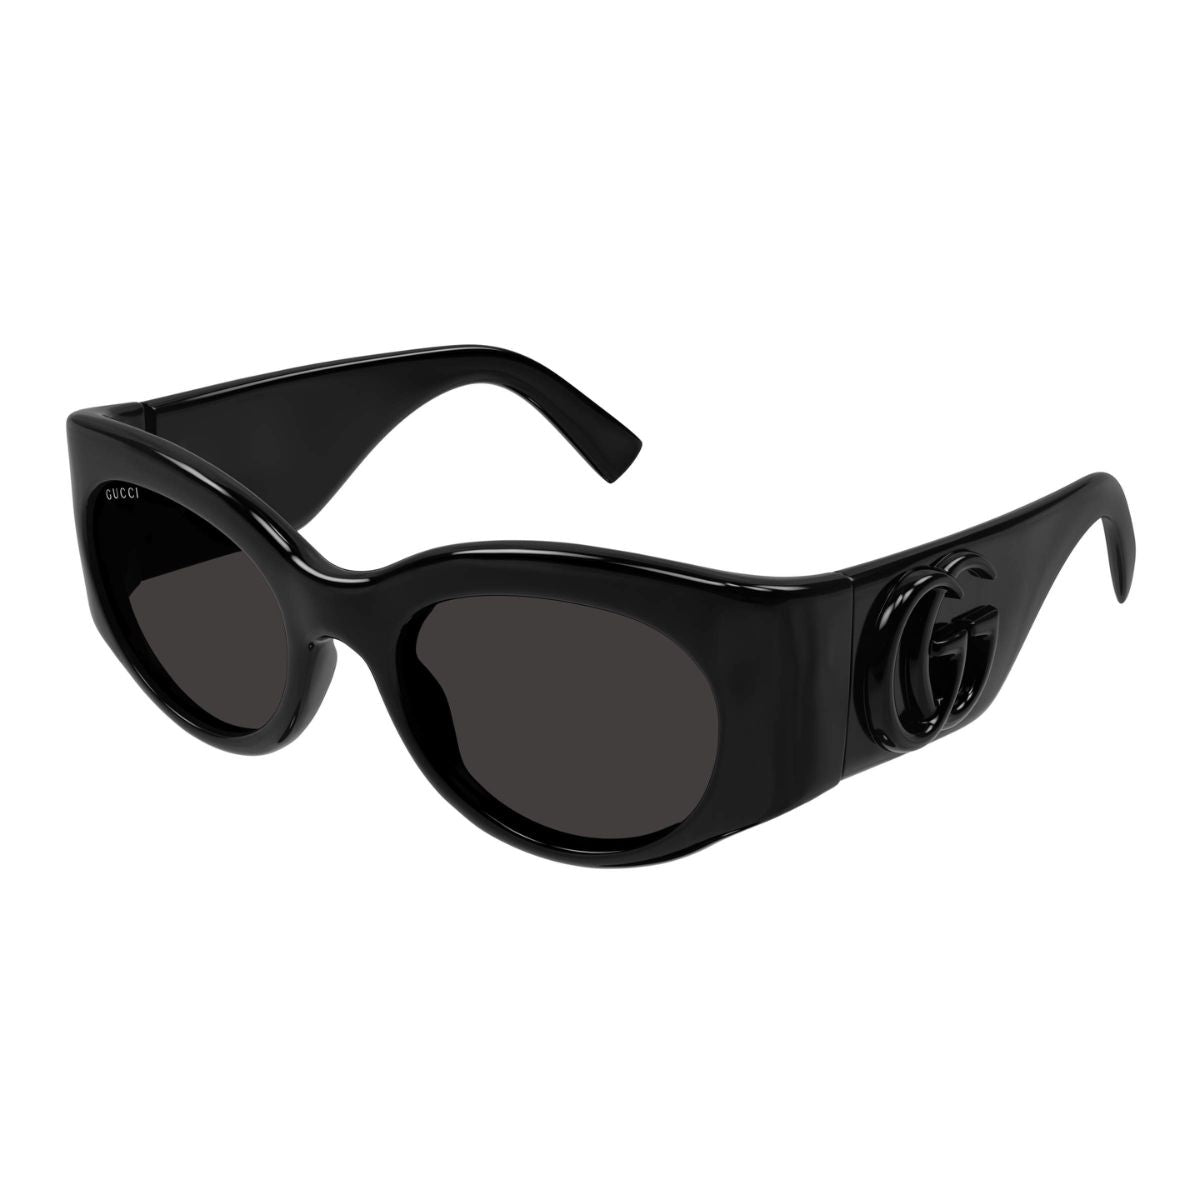 "Buy Trendy UV Protection Sunglasses For Women's At Optorium"